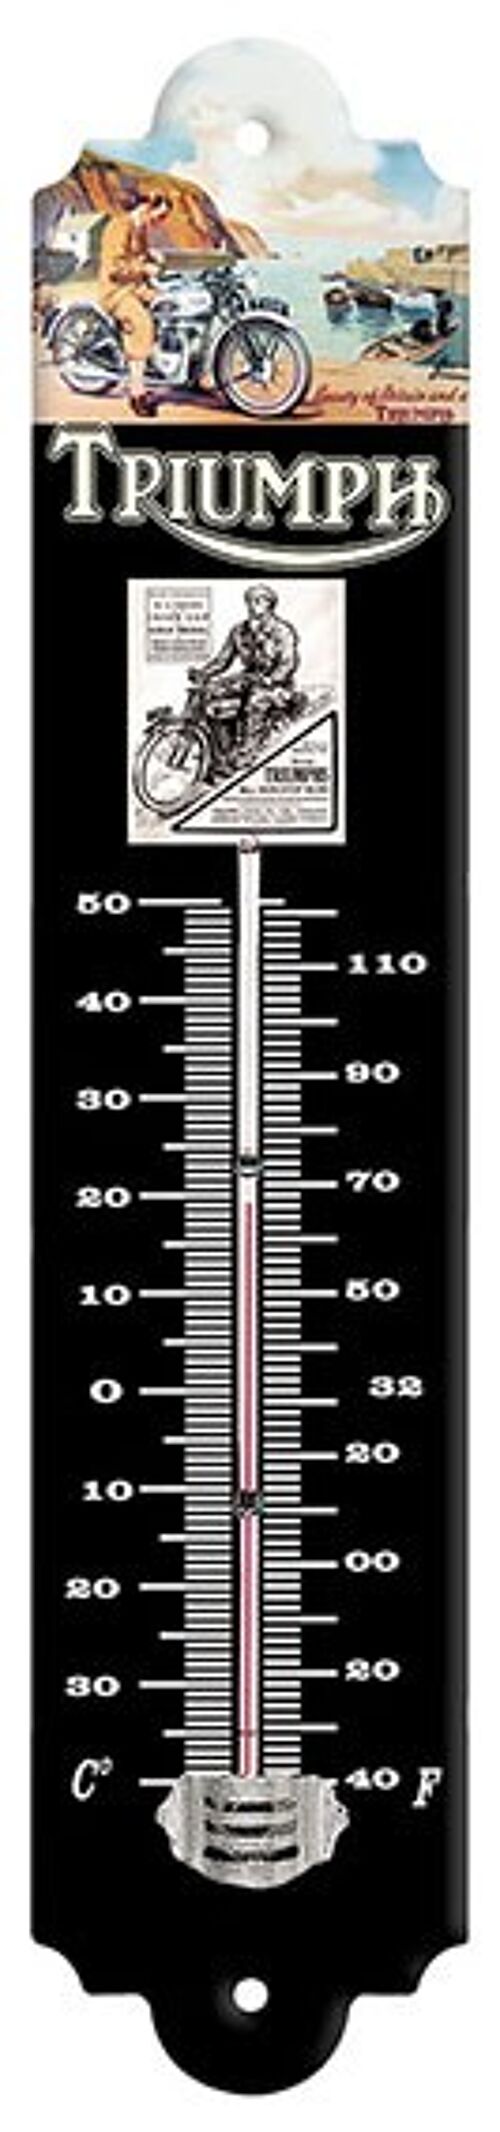 Thermomètre Vintage Triumph thermo petit modele